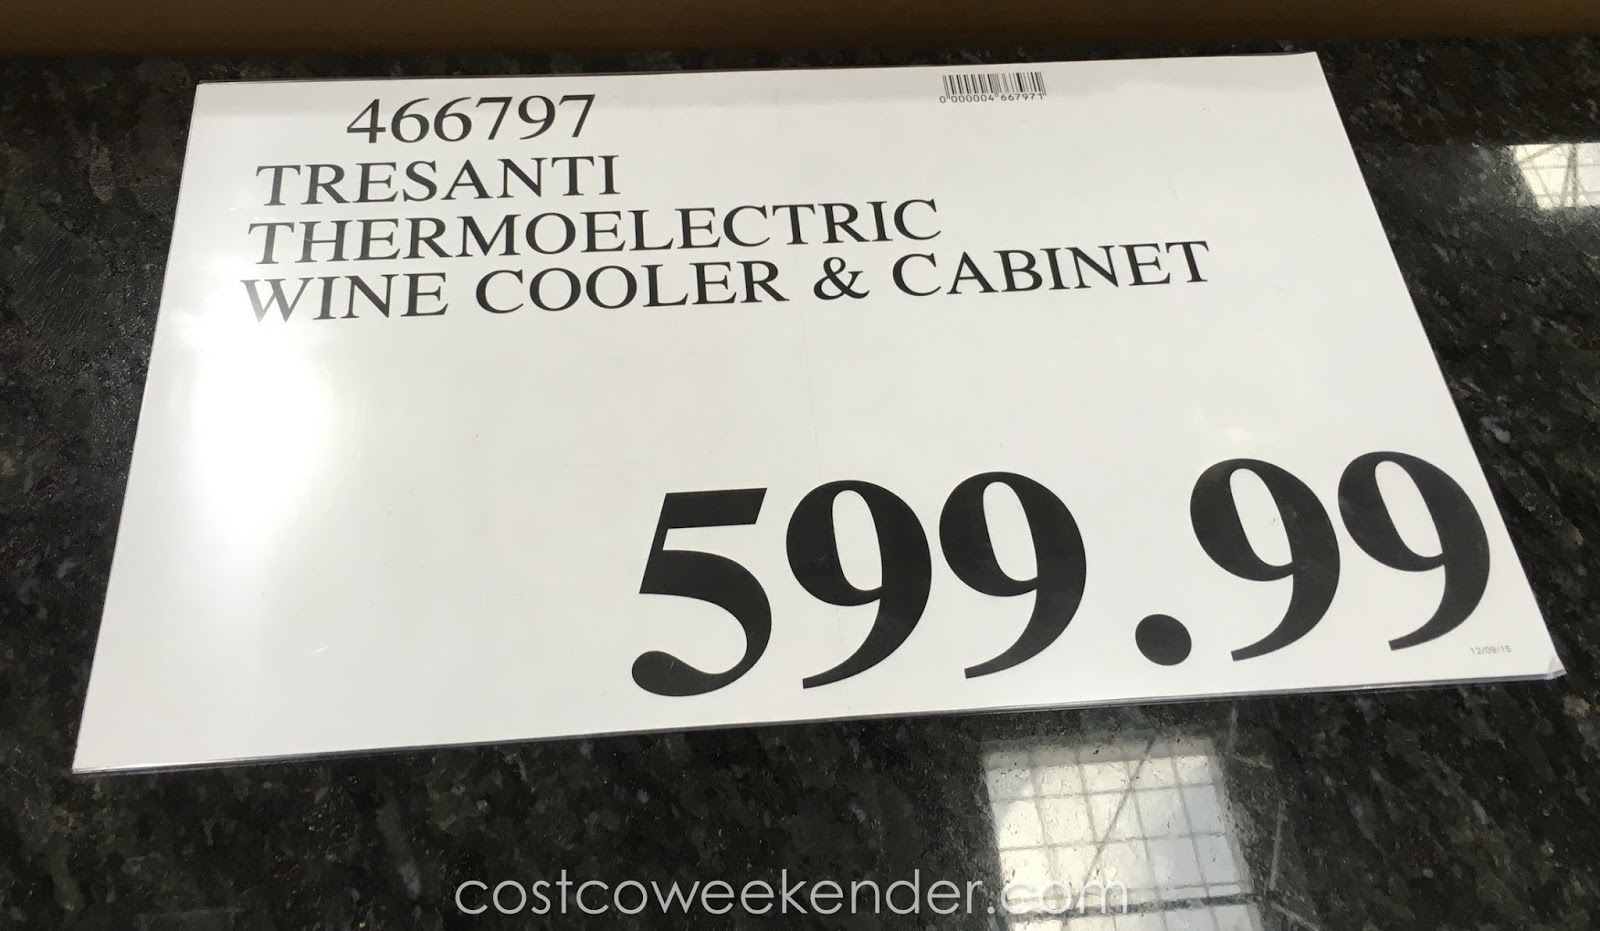 Tresanti Thermoelectric Wine Cooler Cabinet Costco Weekender